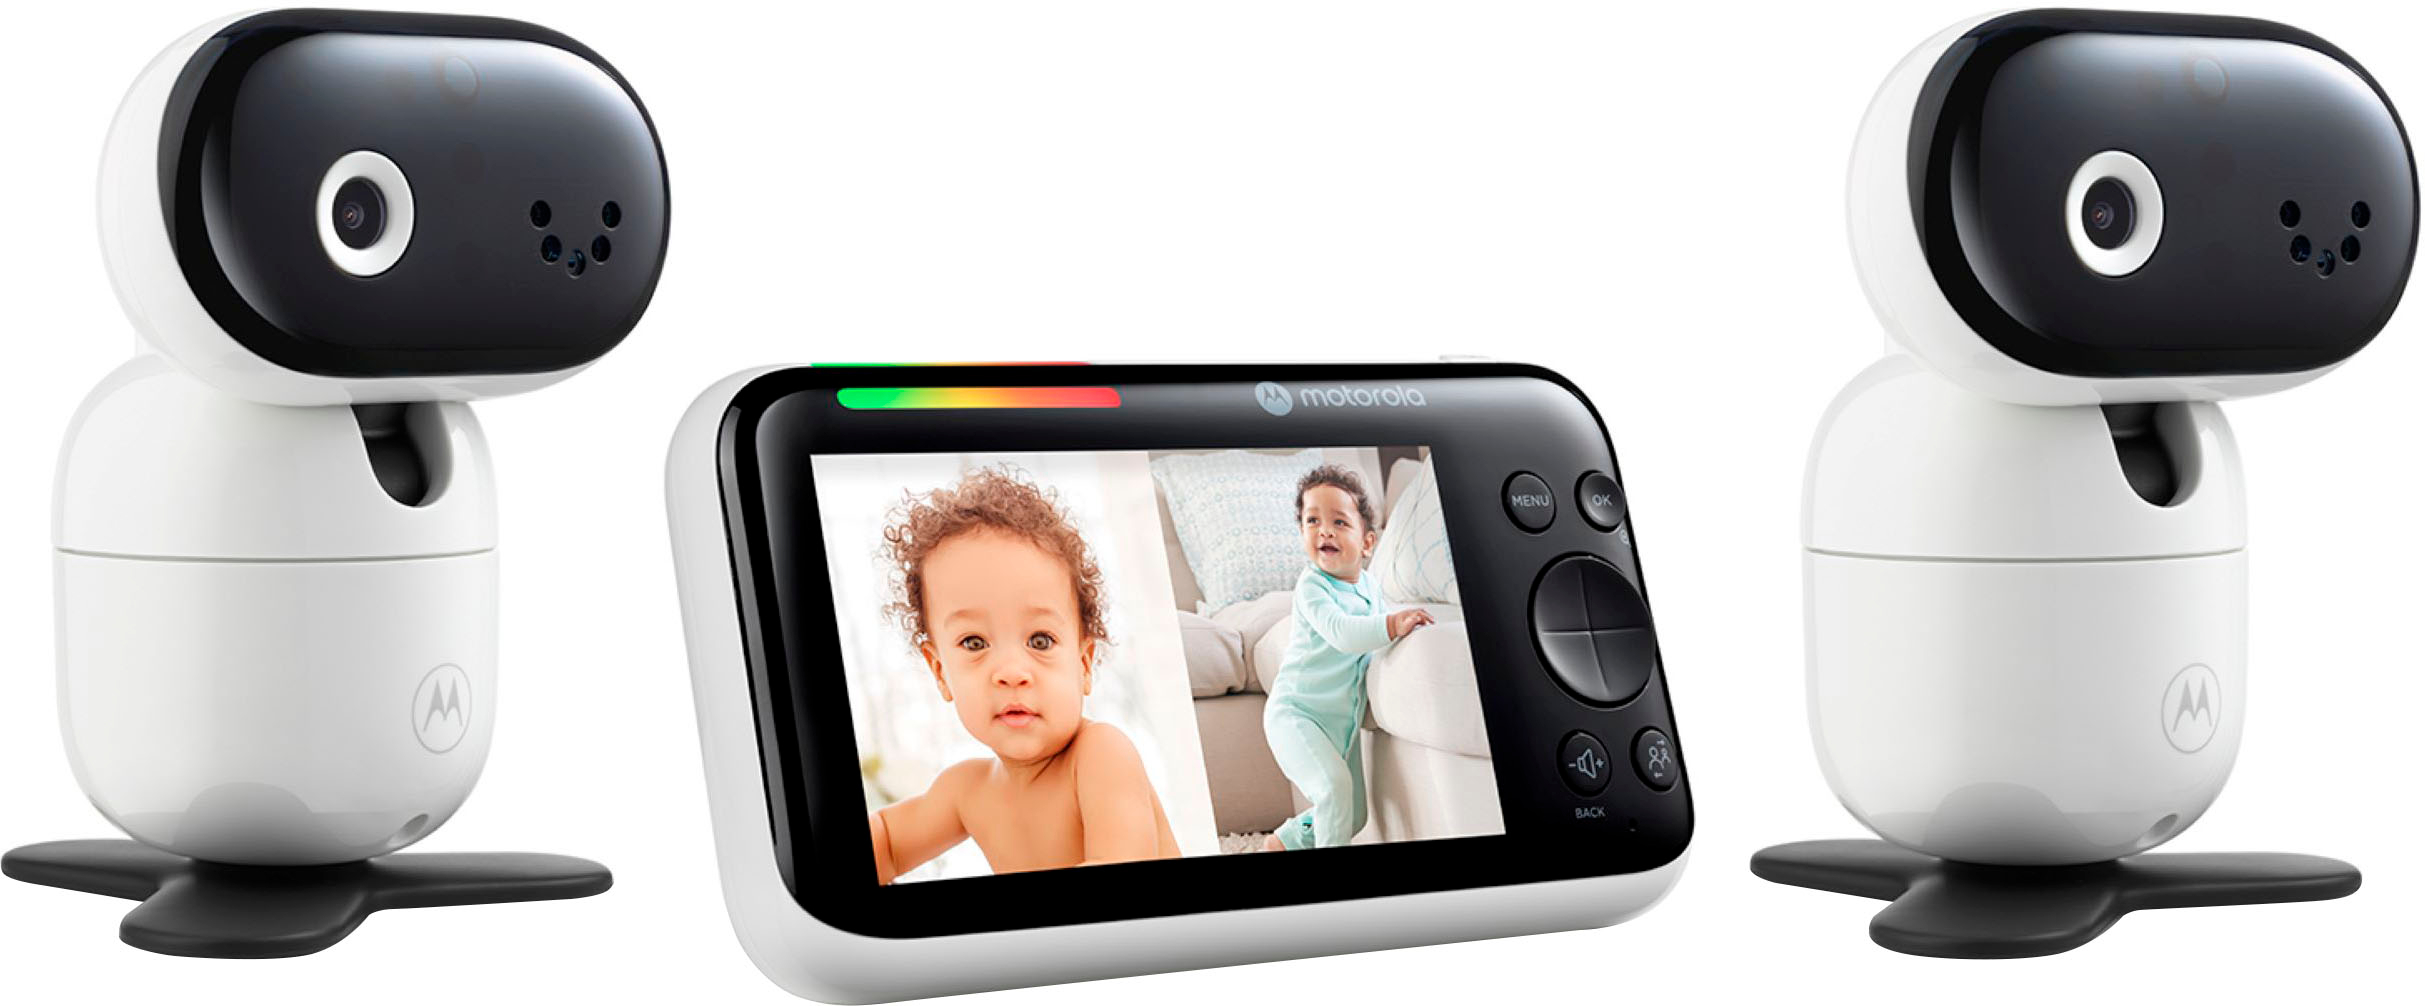 Motorola PIP 1510 Connect 5.0 Motorized Video Baby Monitor